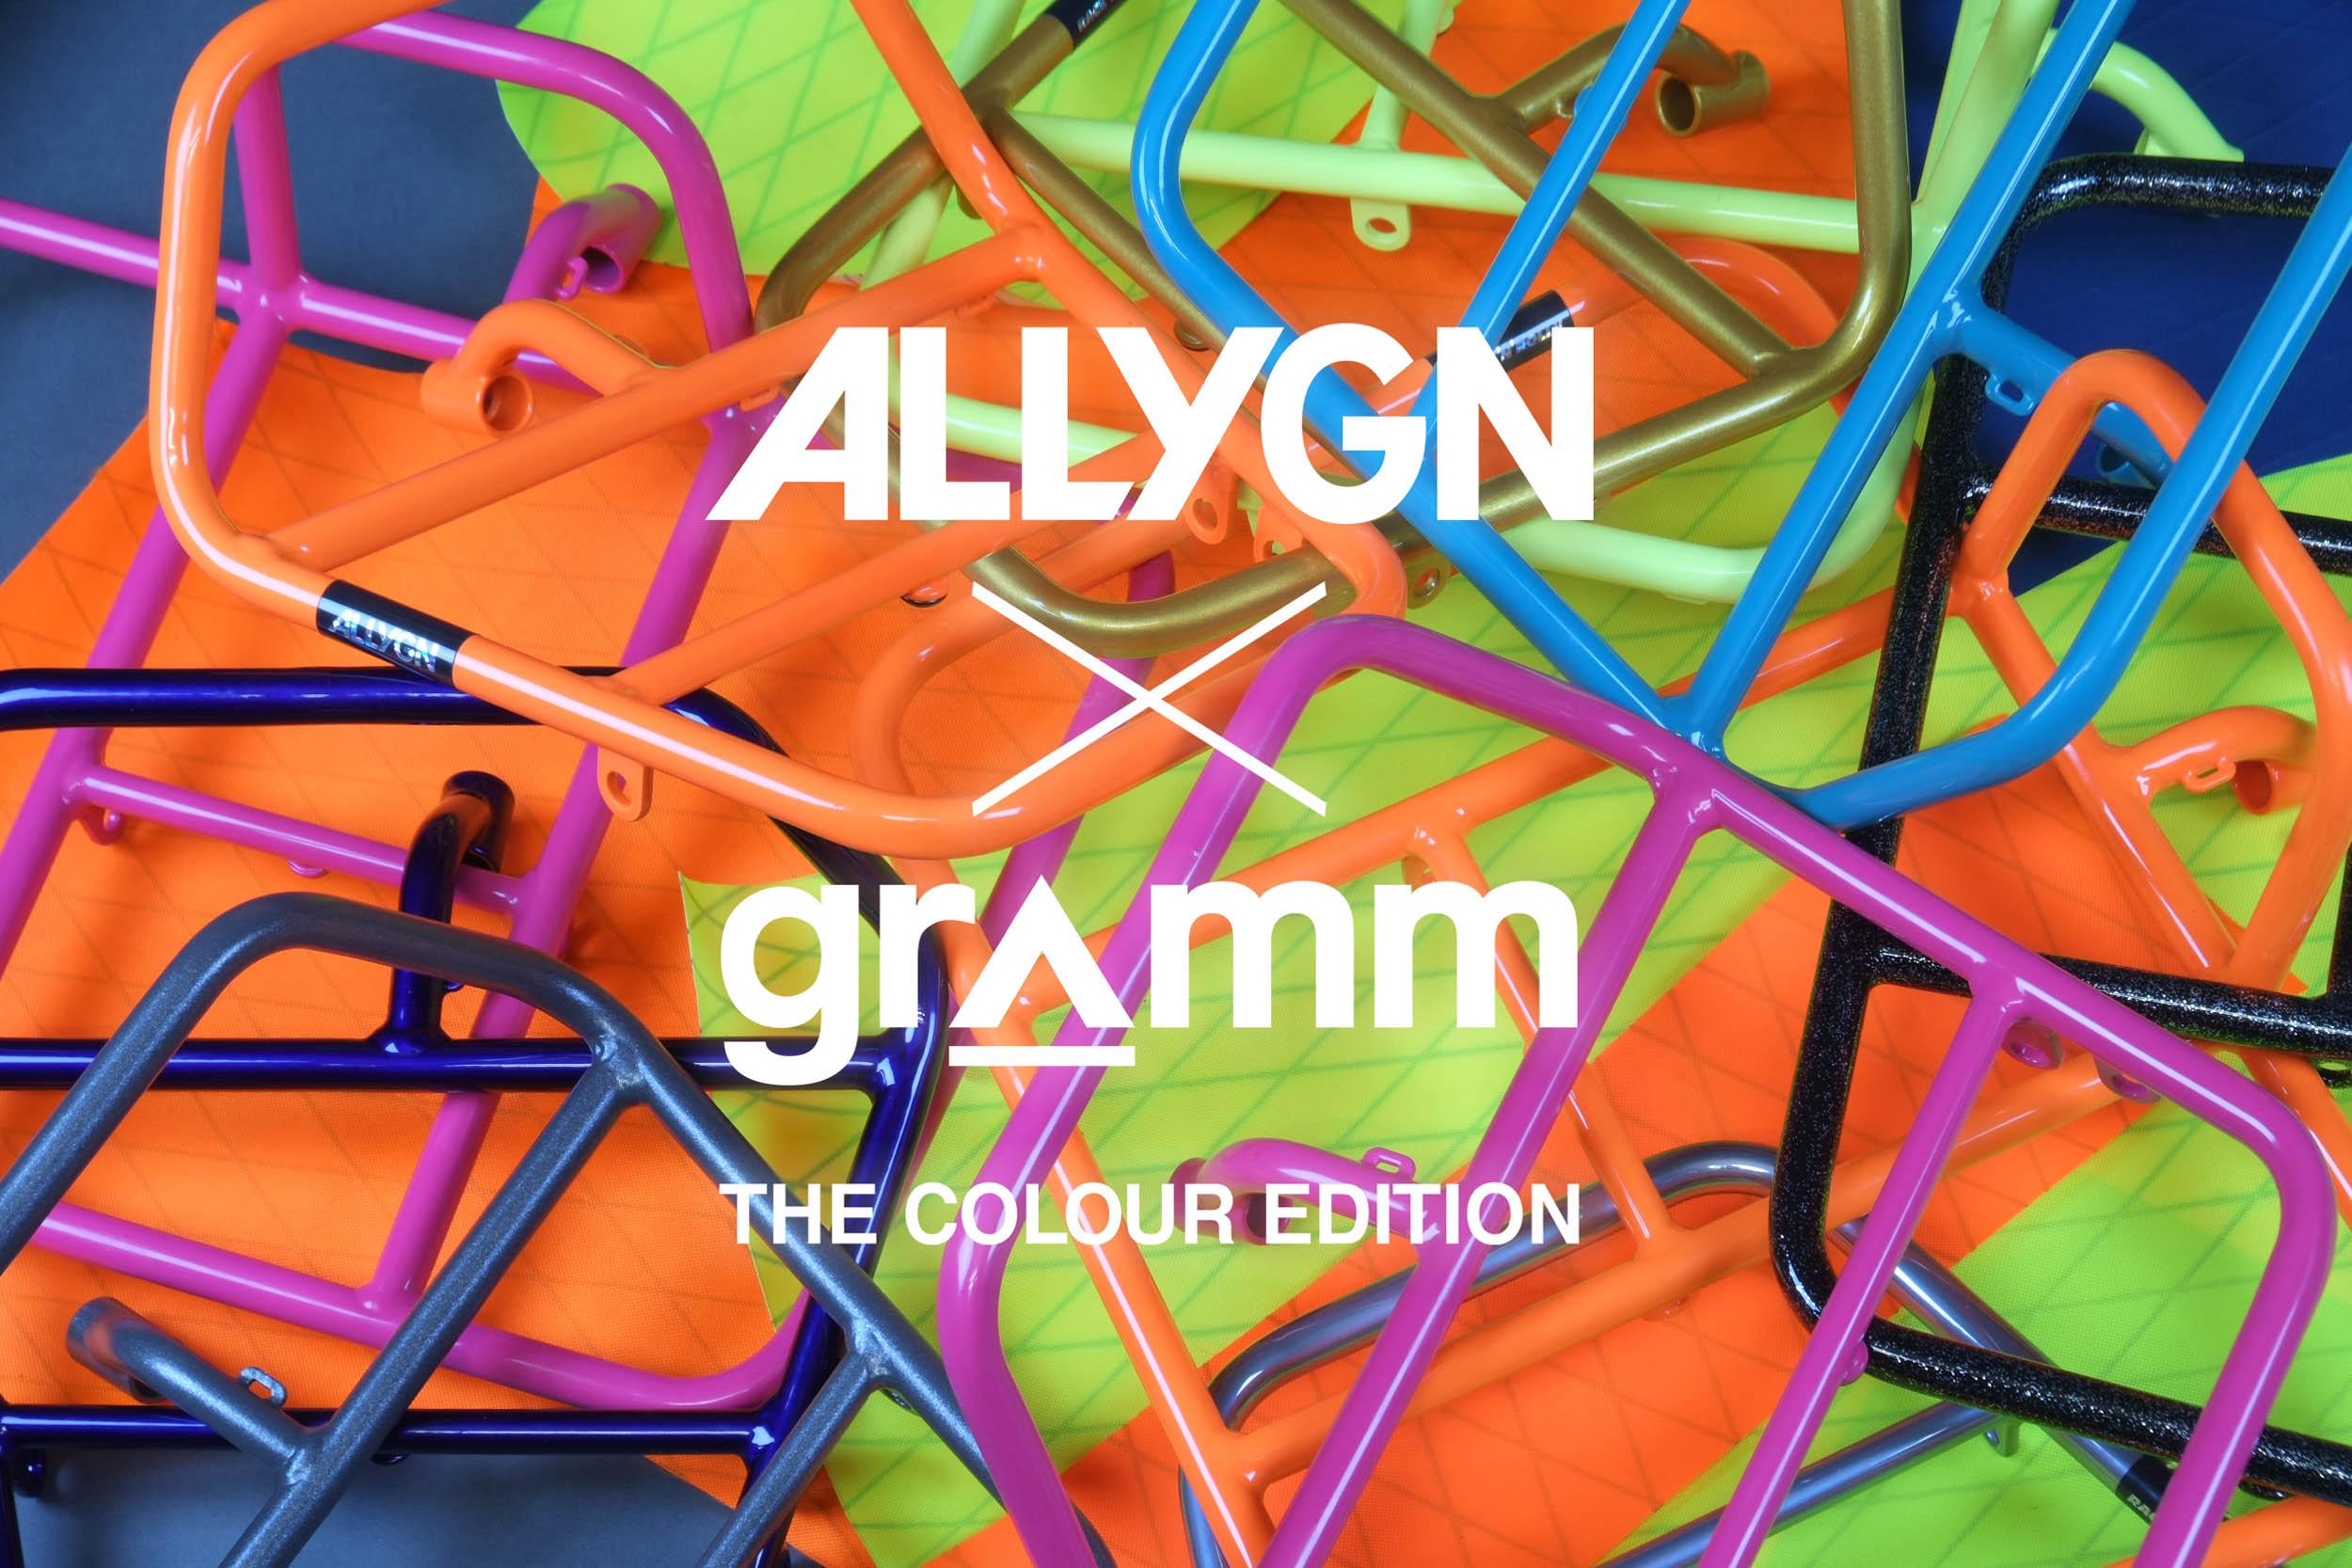 Allygn Gramm Rainbow Bags Racks